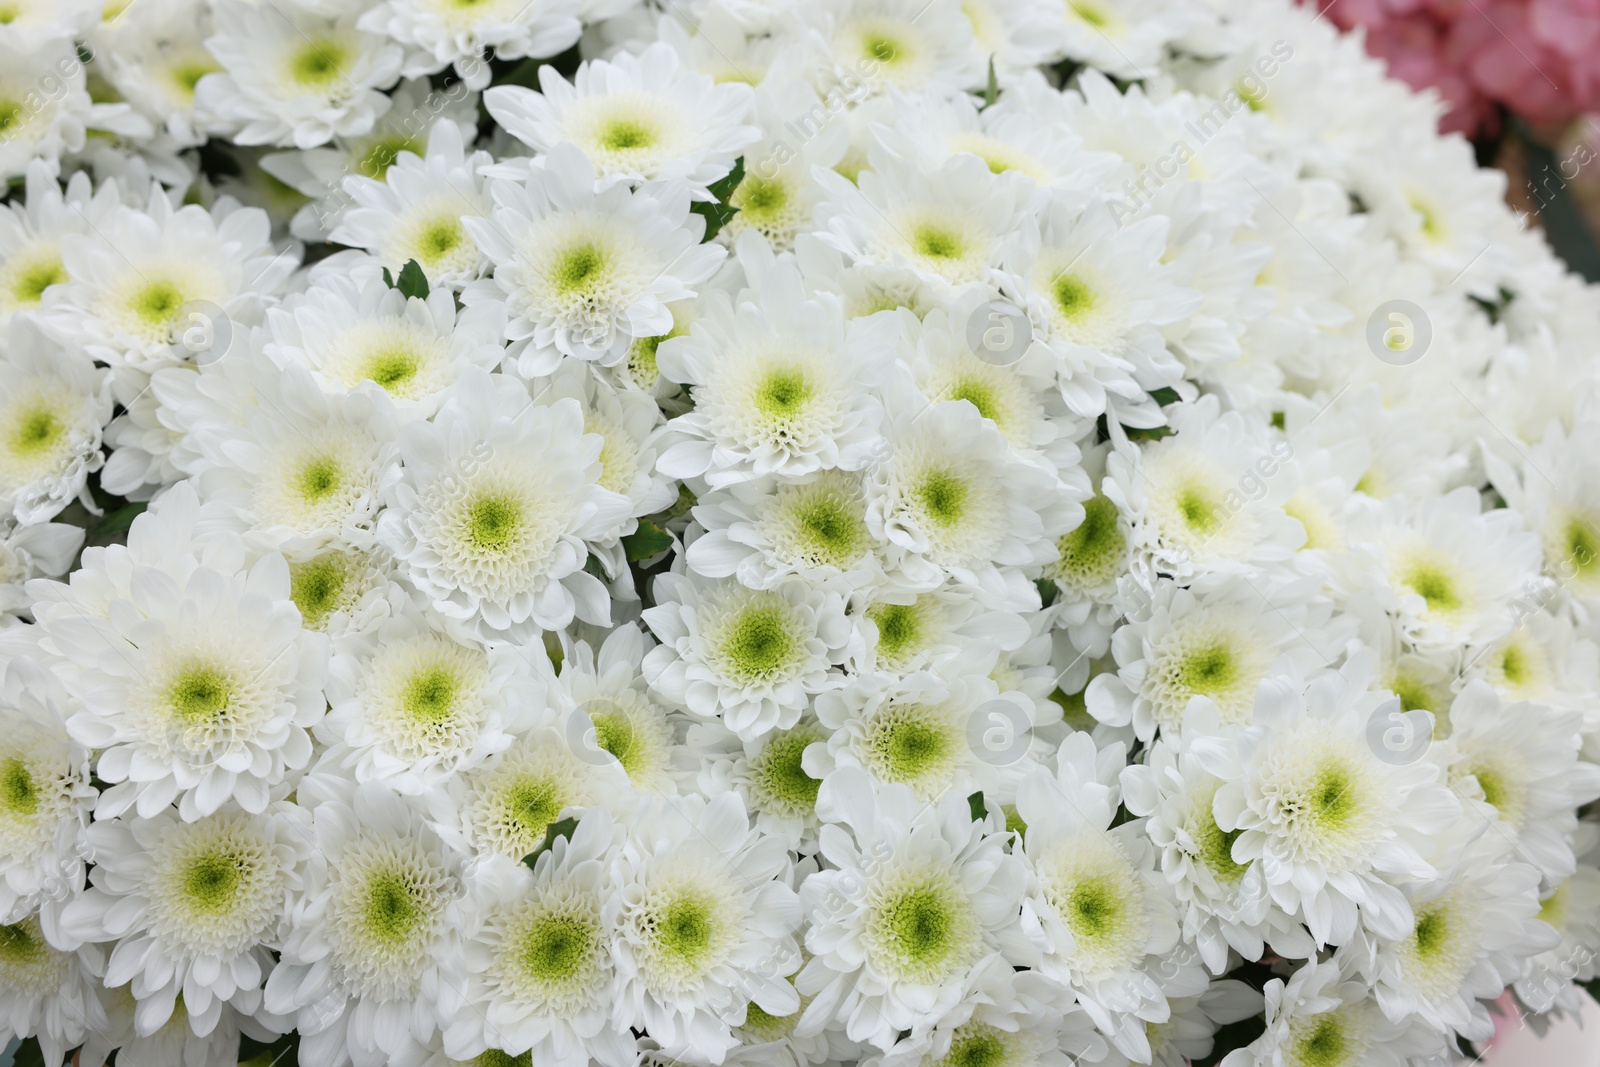 Photo of Chrysanthemum plant with beautiful white flowers, closeup